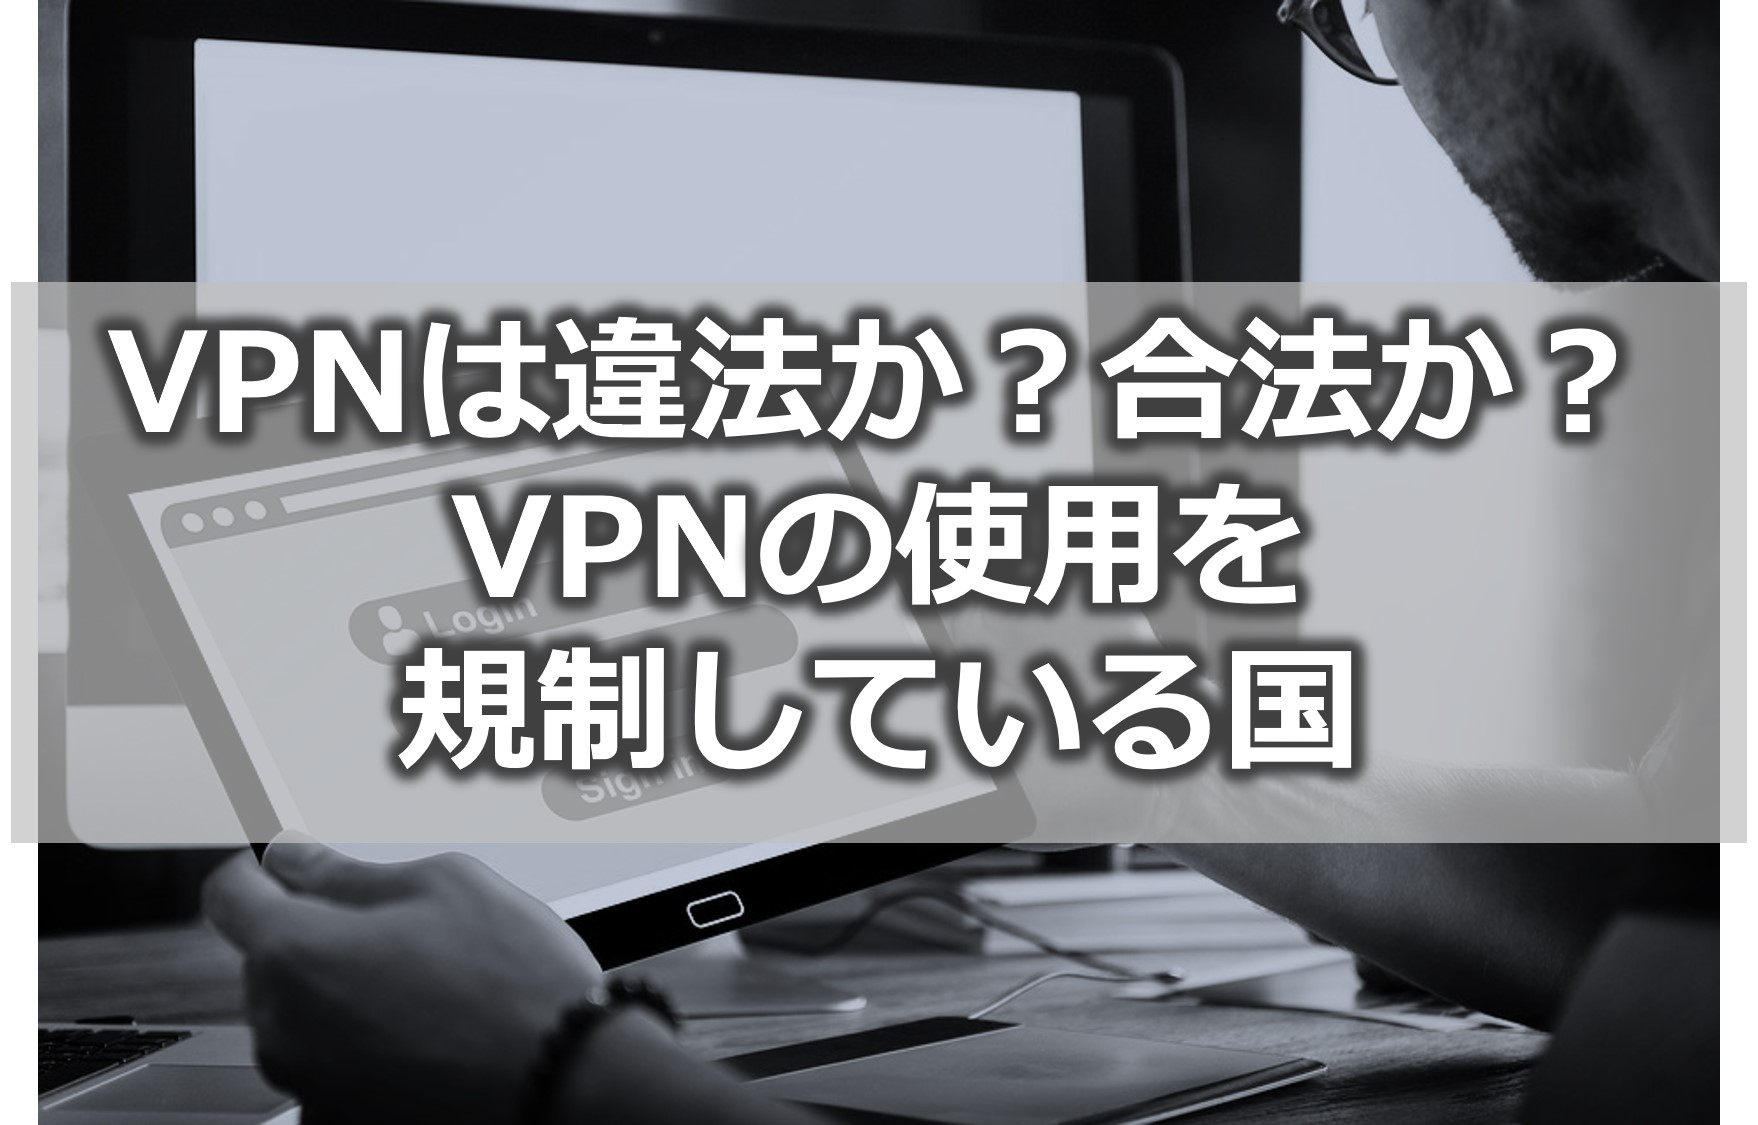 VPNは違法ですか？